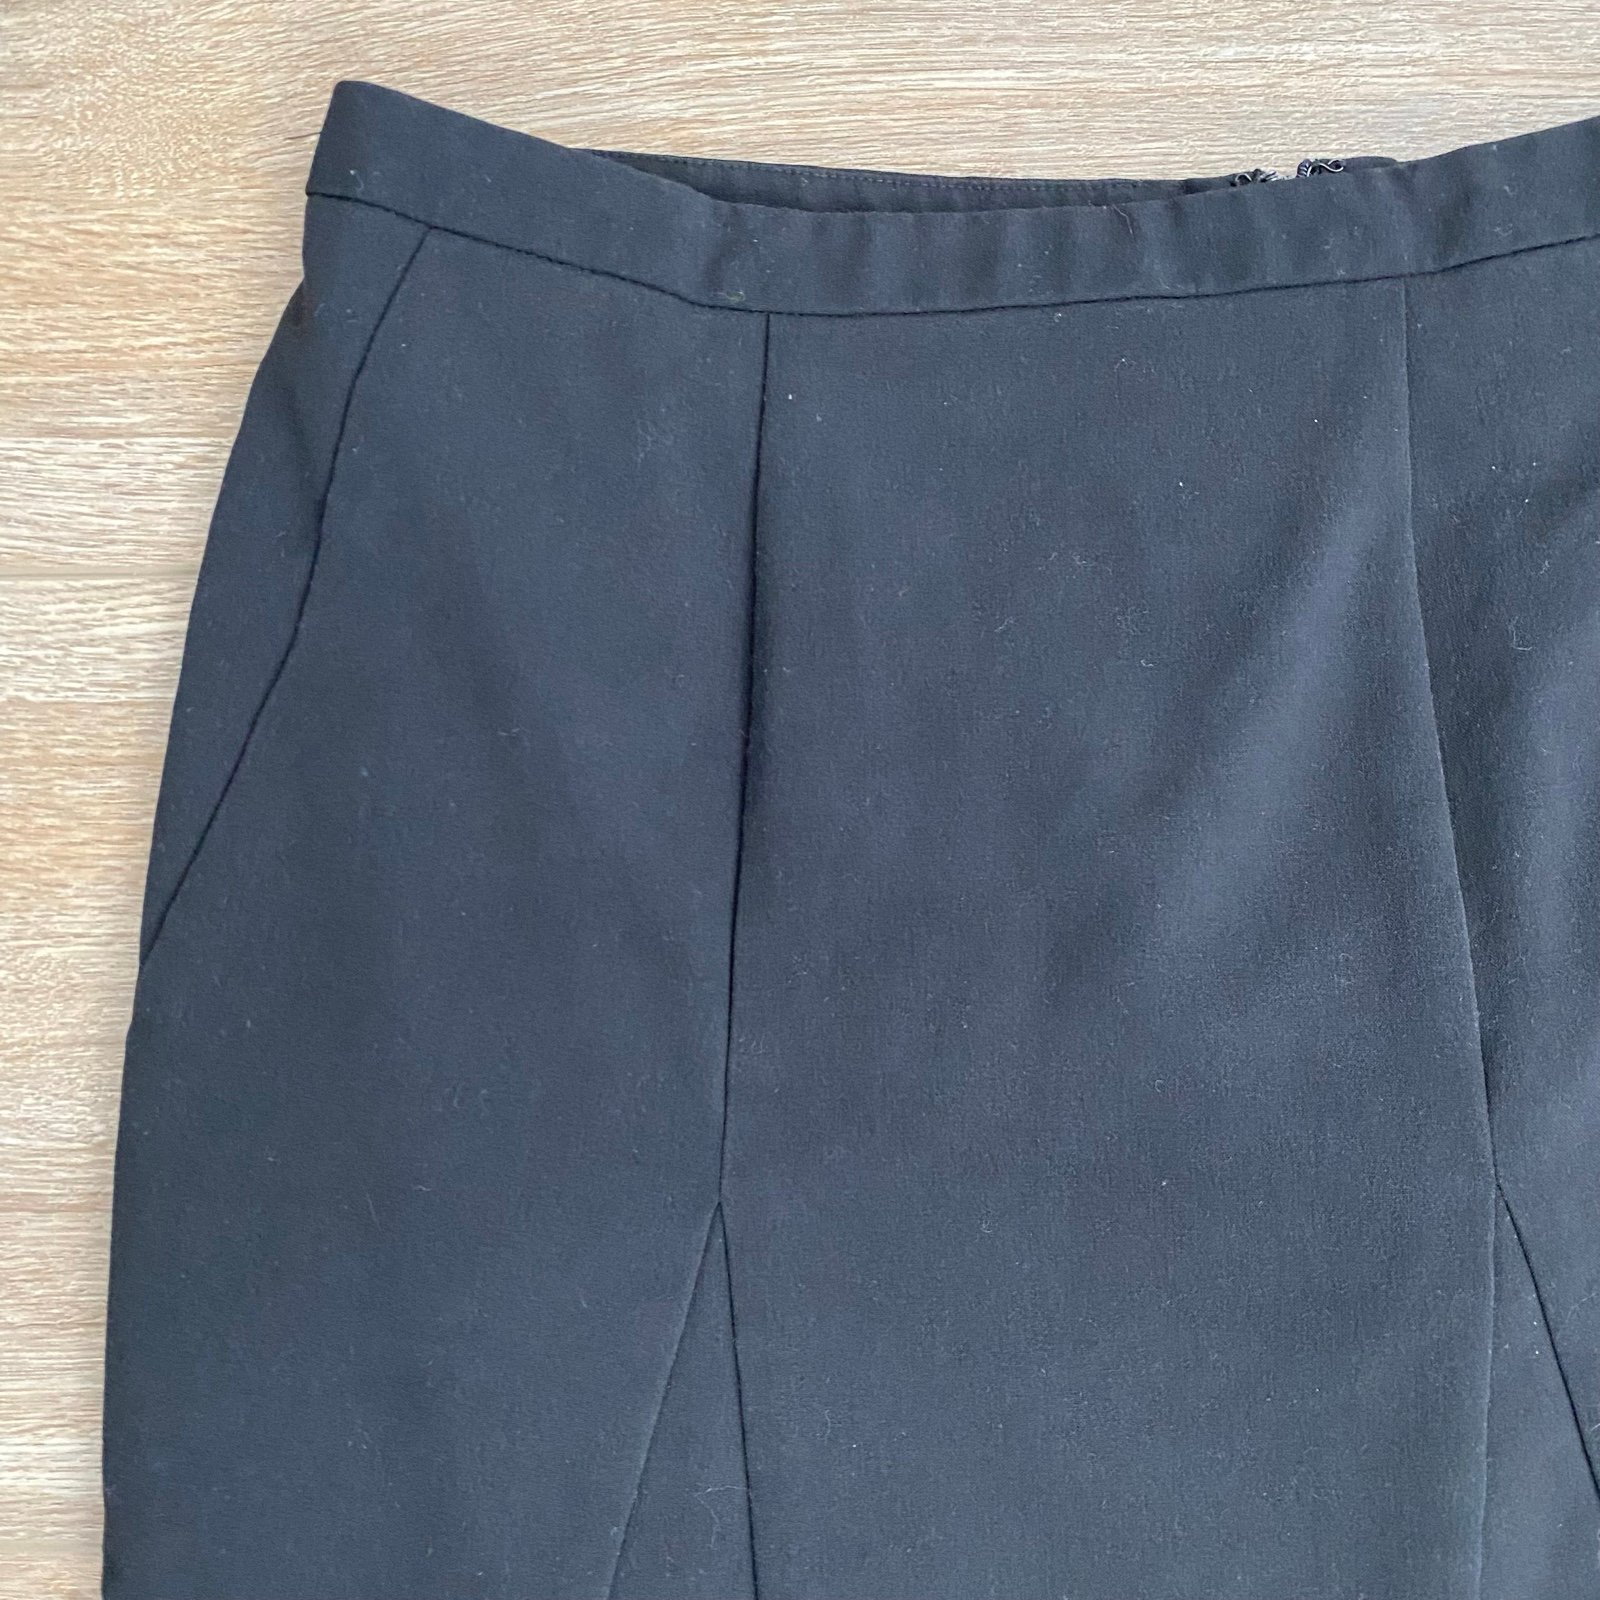 large selection Worthington Size 10 Women’s Black Maxi Skirt lMnnAbYPG outlet online shop